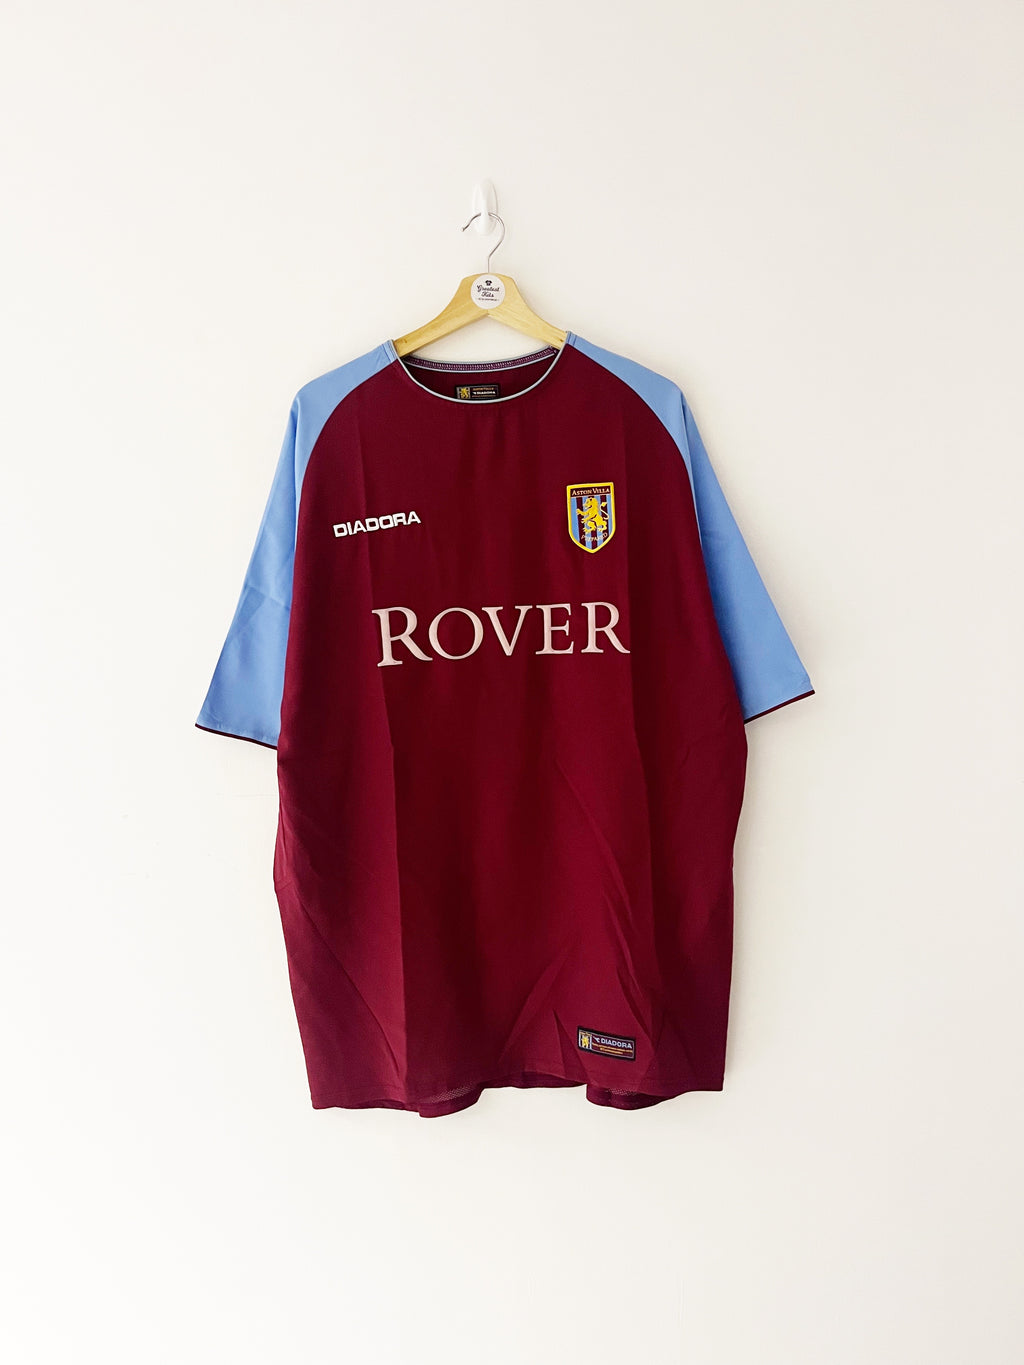 2003/04 Aston Villa Home Shirt (L) 9/10